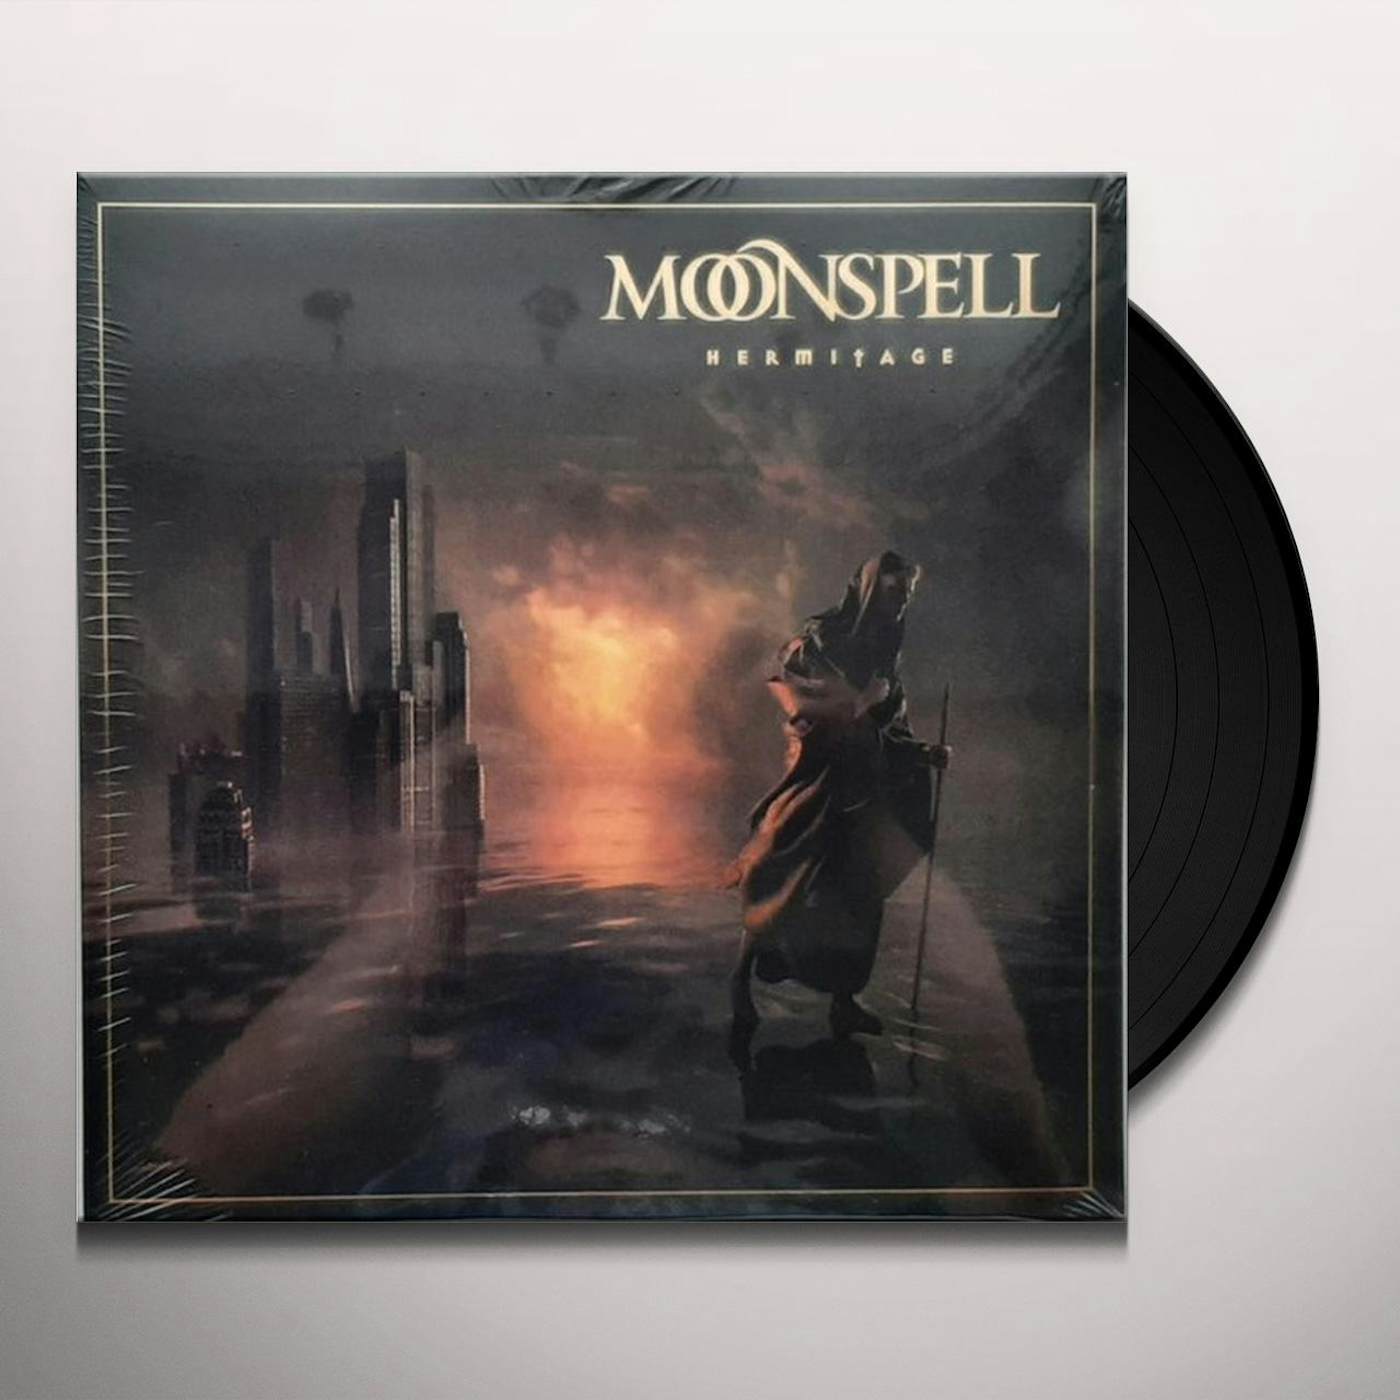 Moonspell HERMITAGE (2LP) Vinyl Record